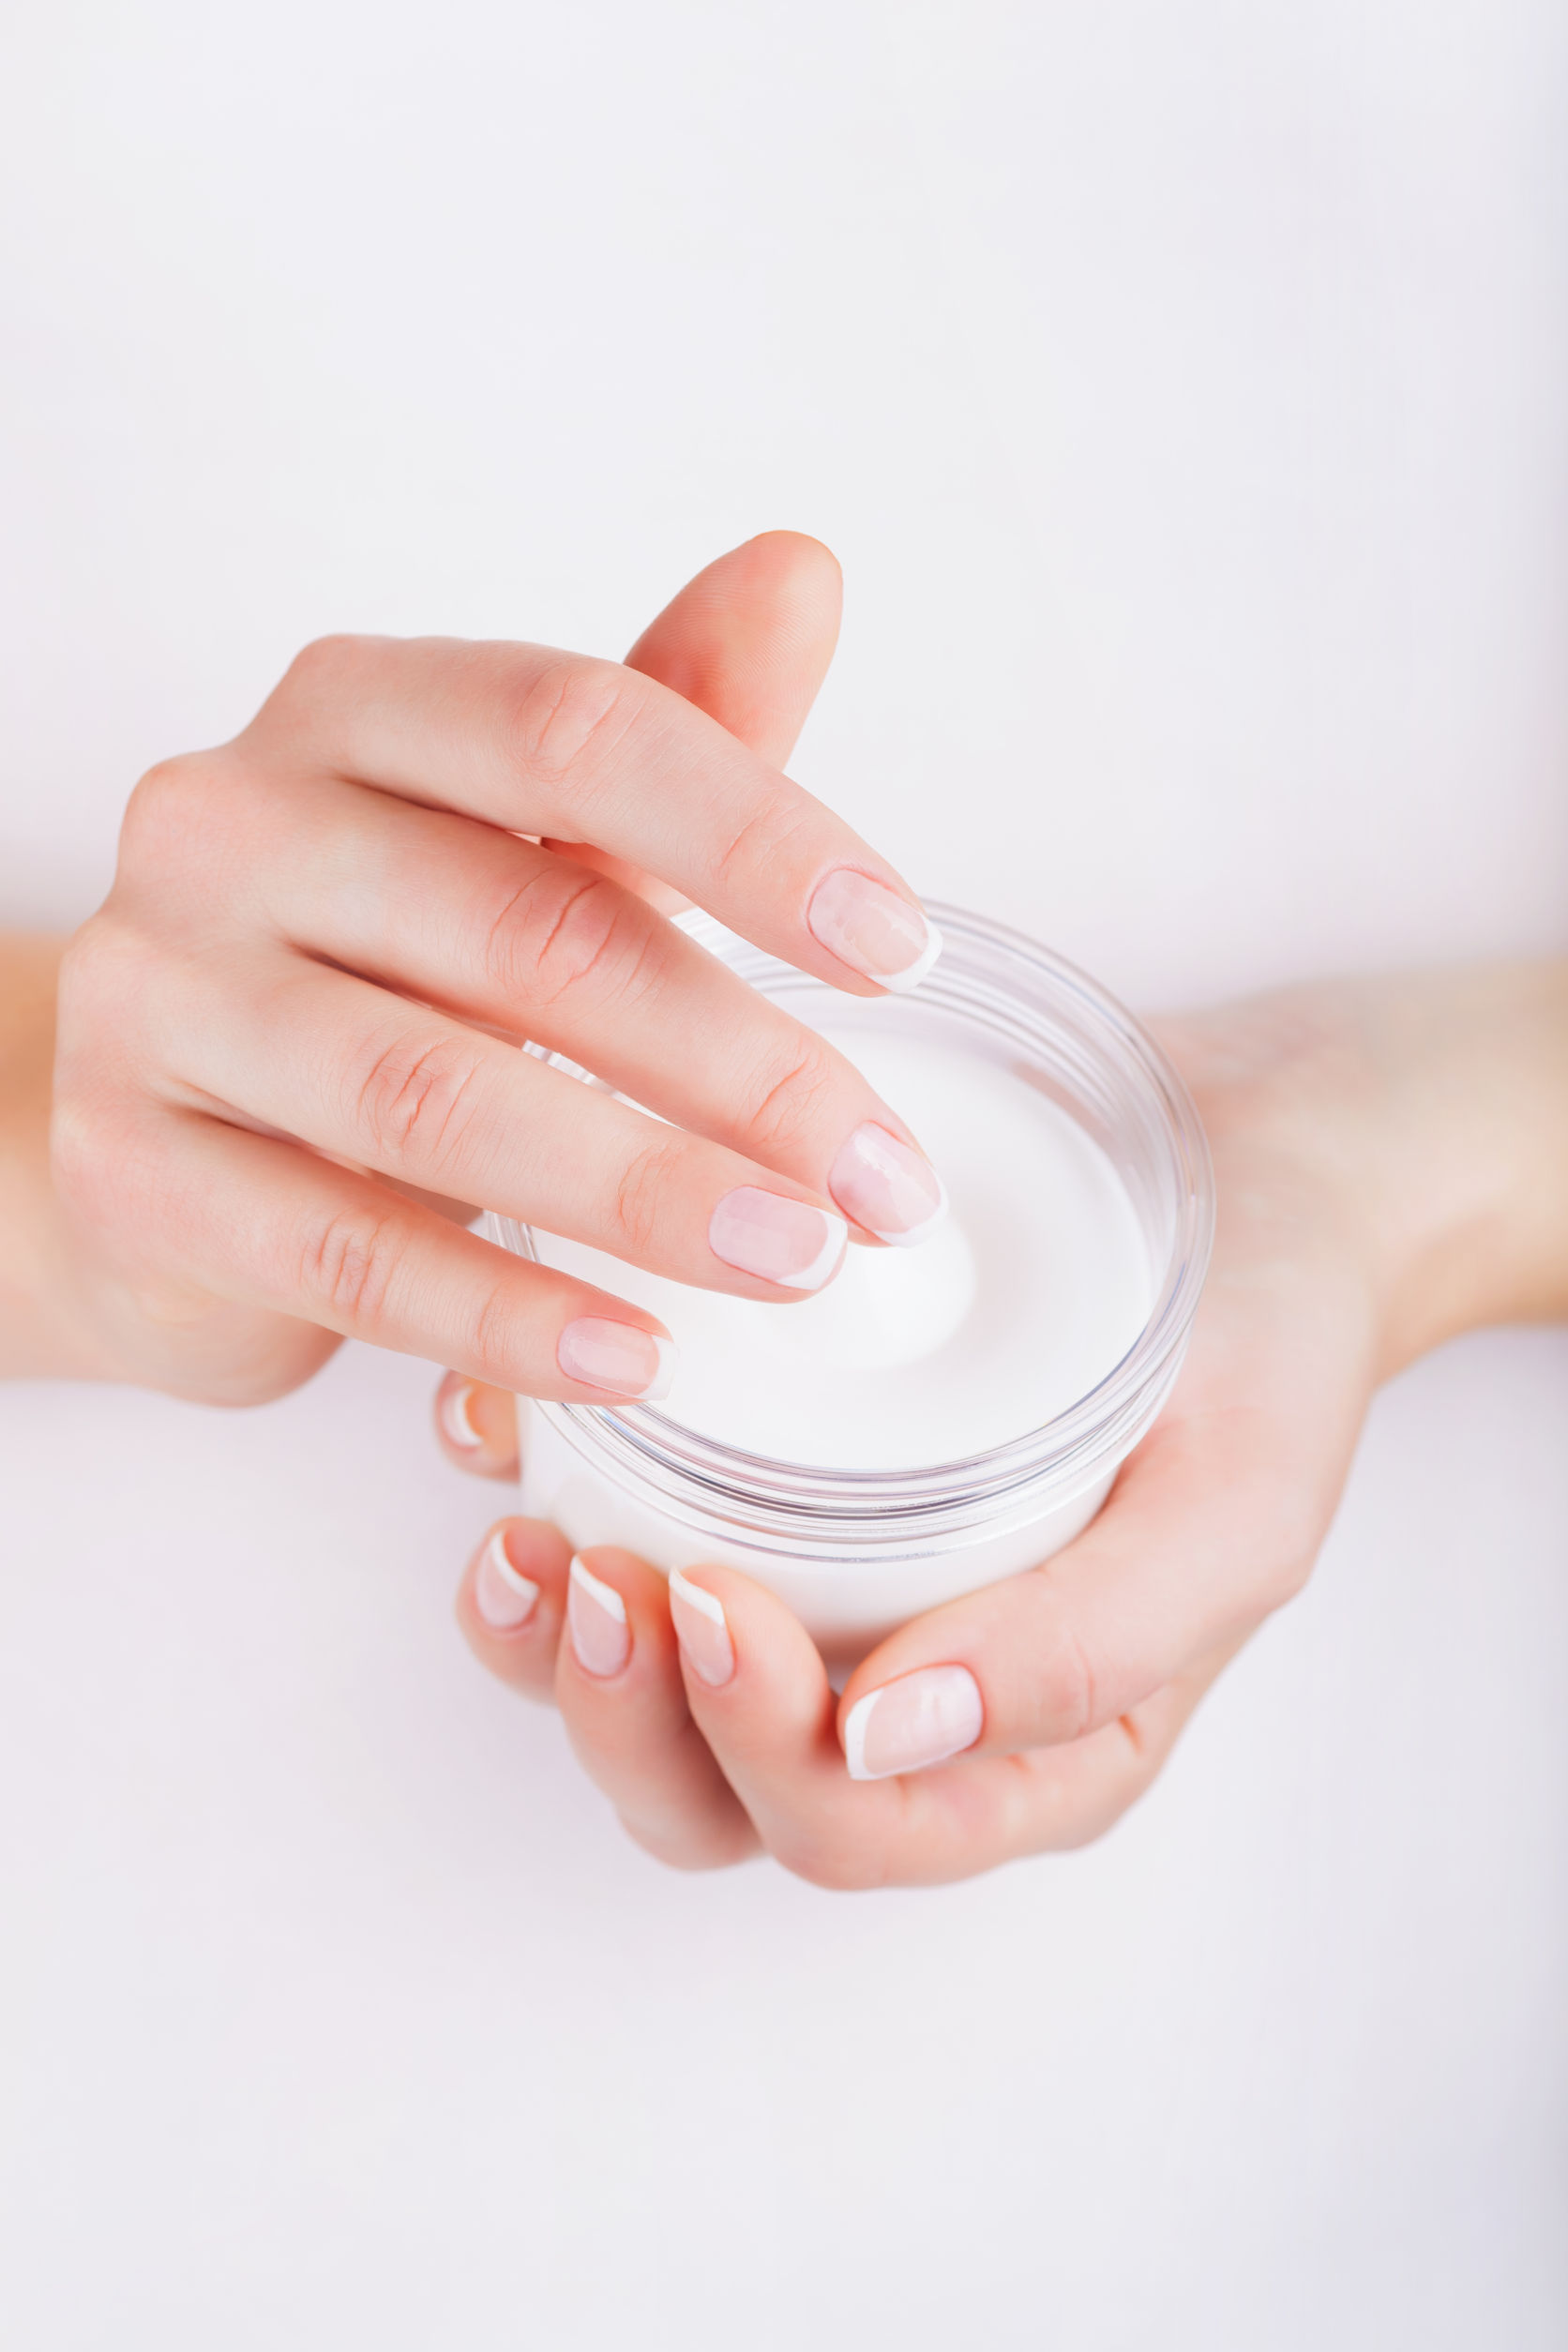 36734796 - woman applying cream on hands